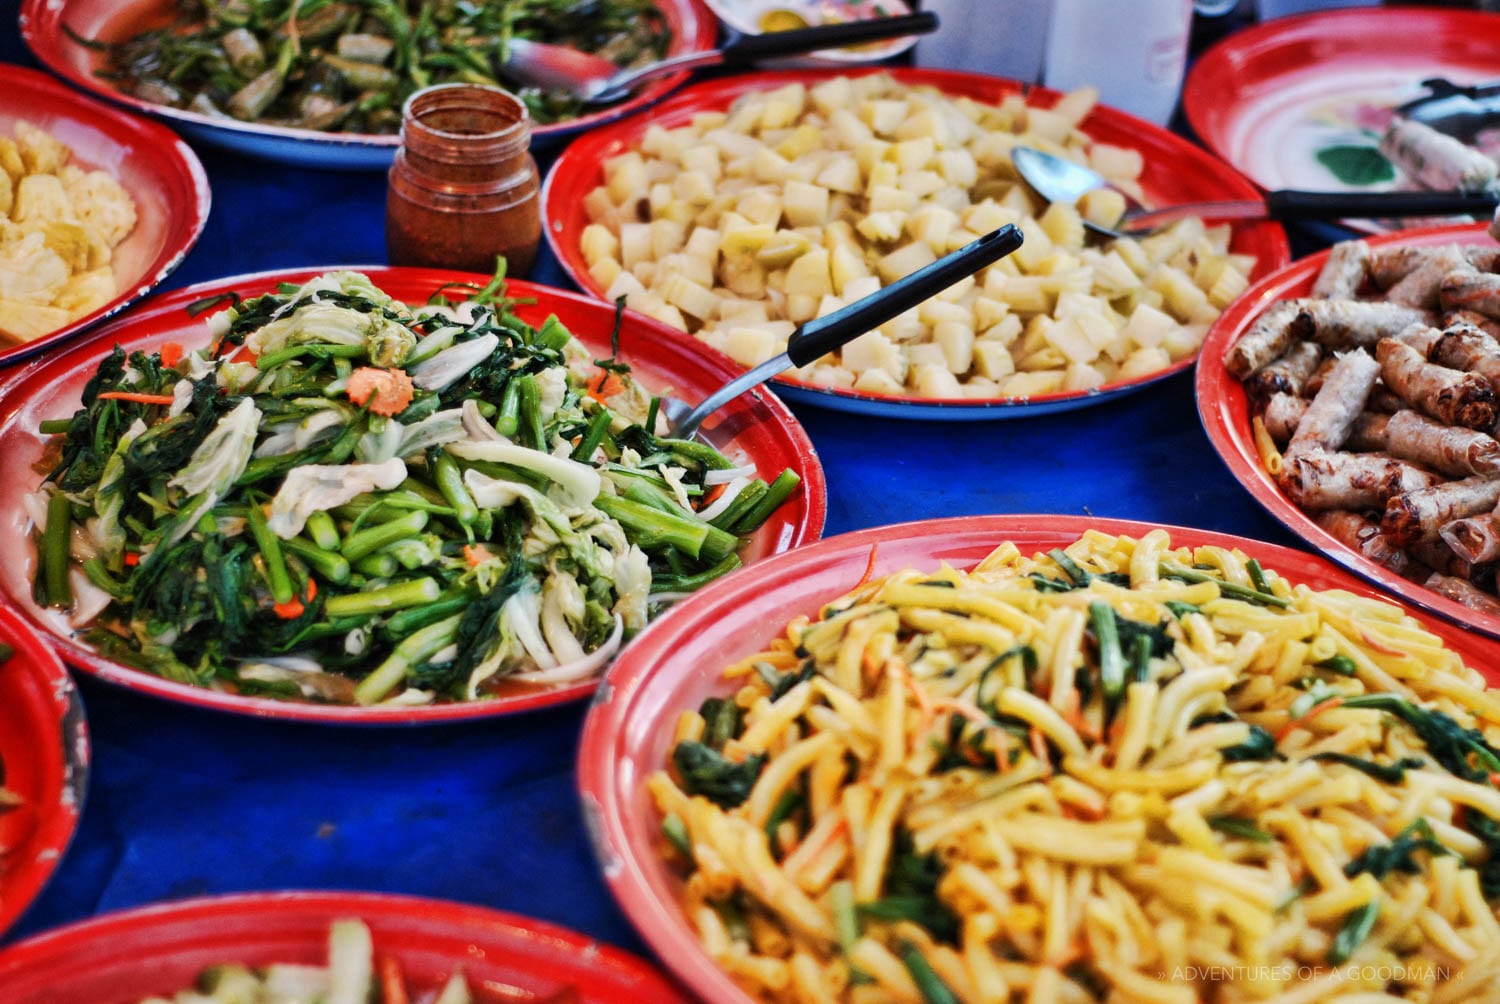 A vegetarian buffet in Luang Prabang, Laos